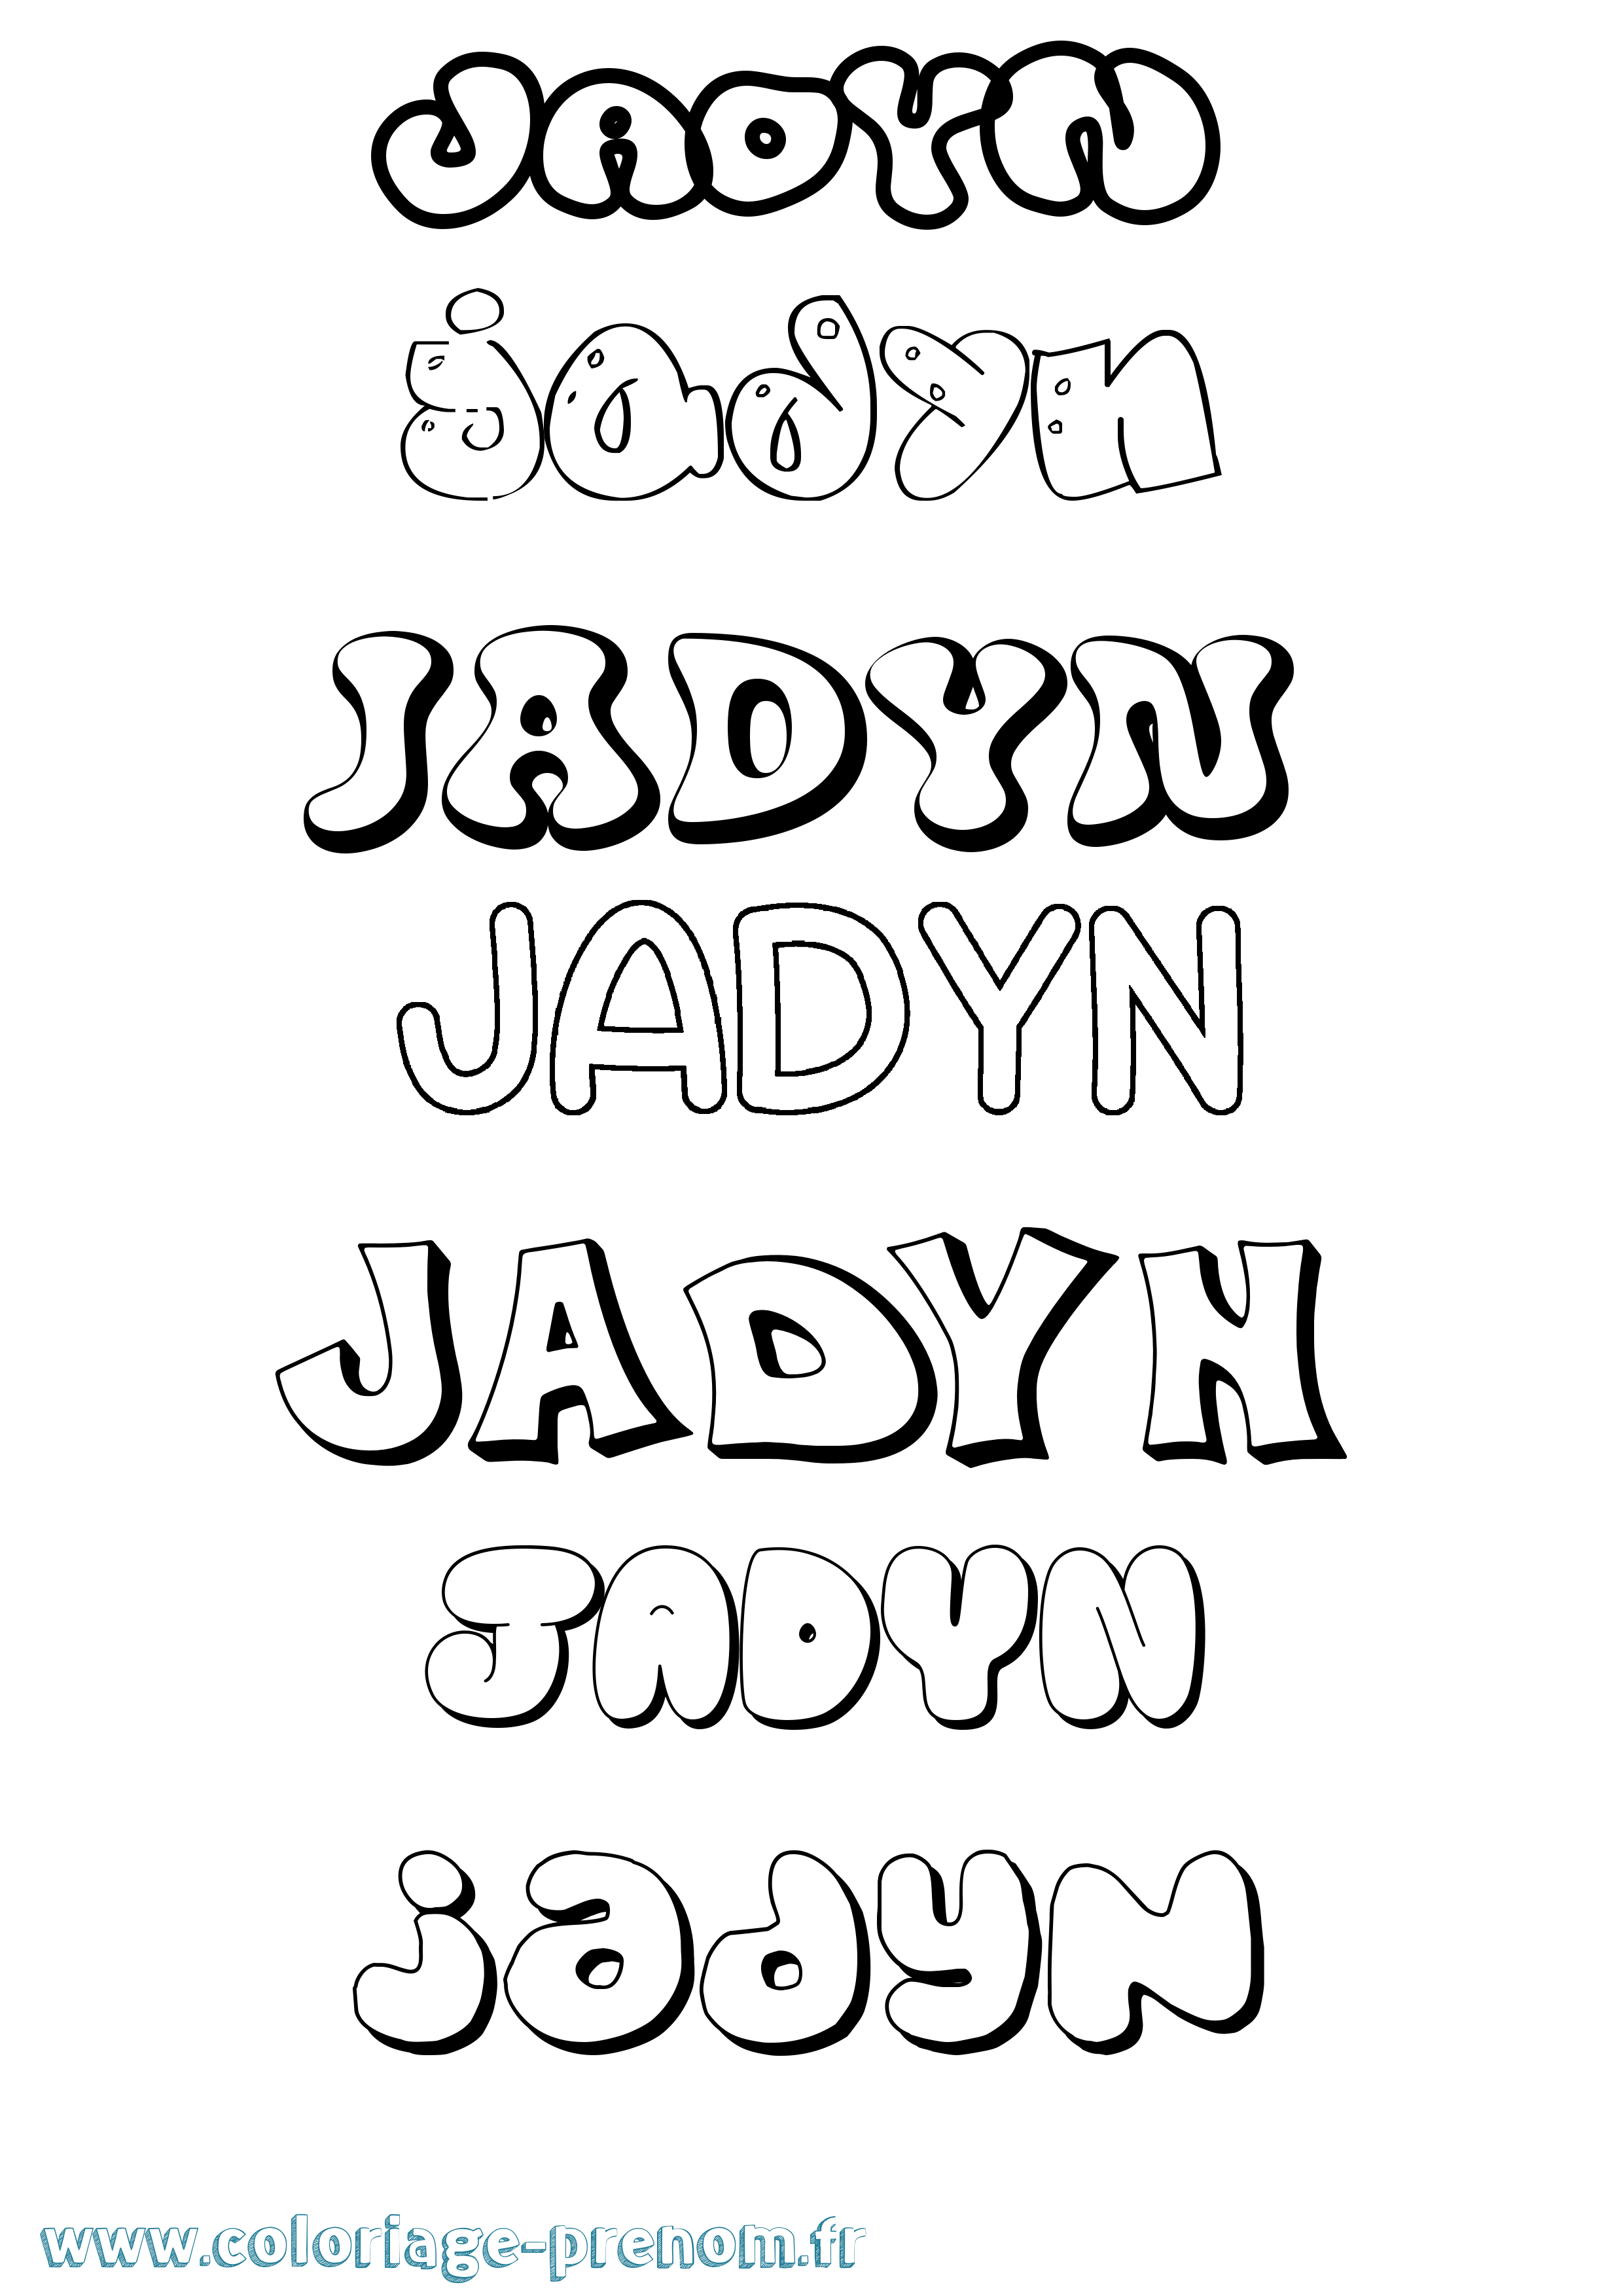 Coloriage prénom Jadyn Bubble